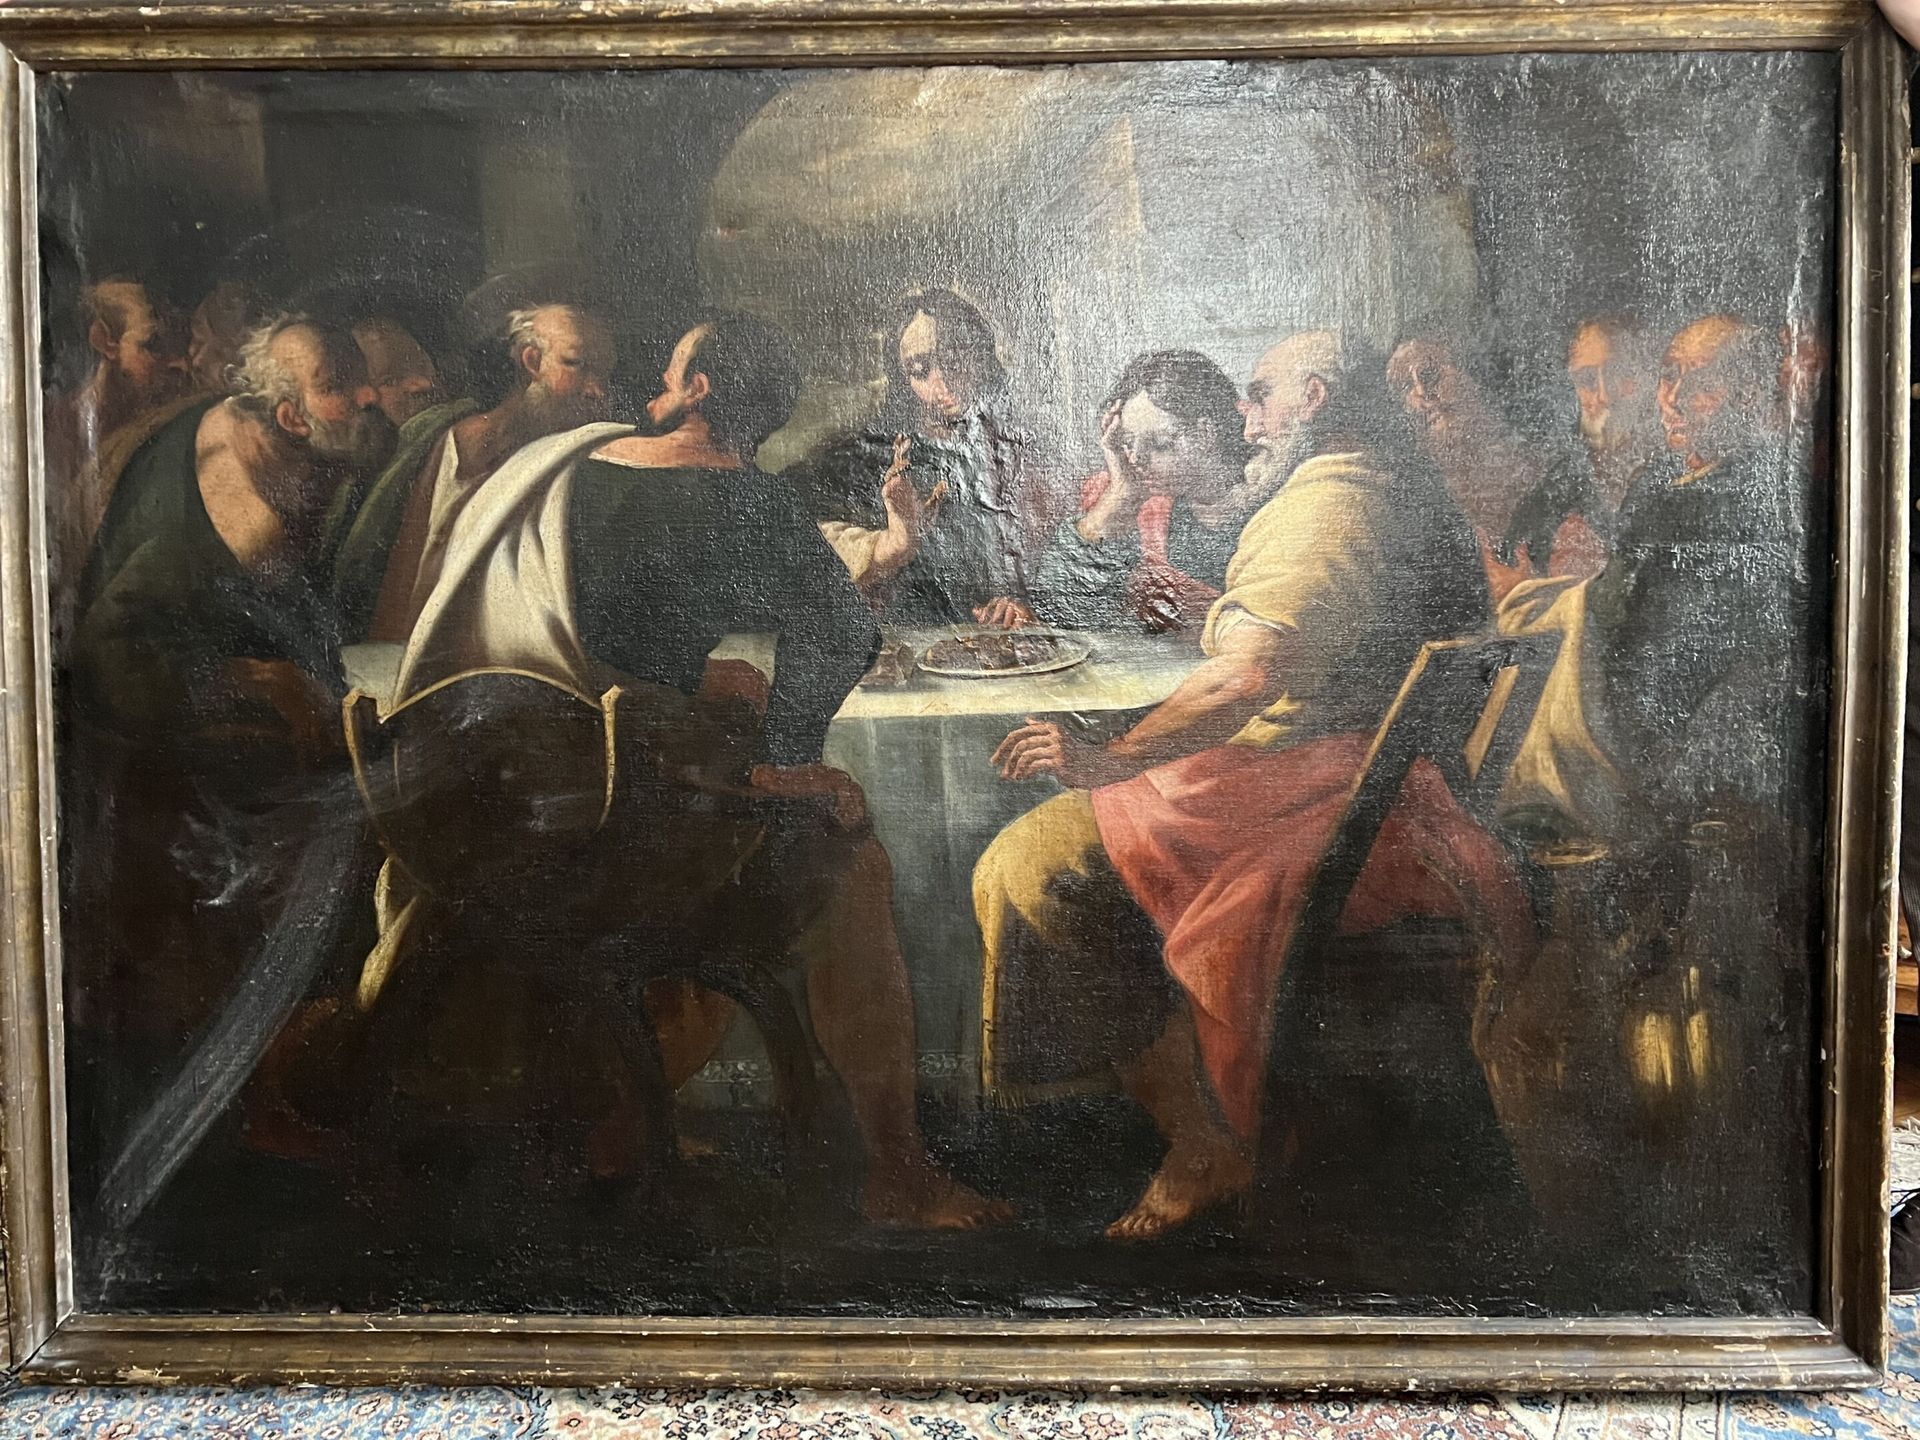 Null 17世纪的学校
最后的晚餐
布面油画 
(修复后)
128 x 183厘米